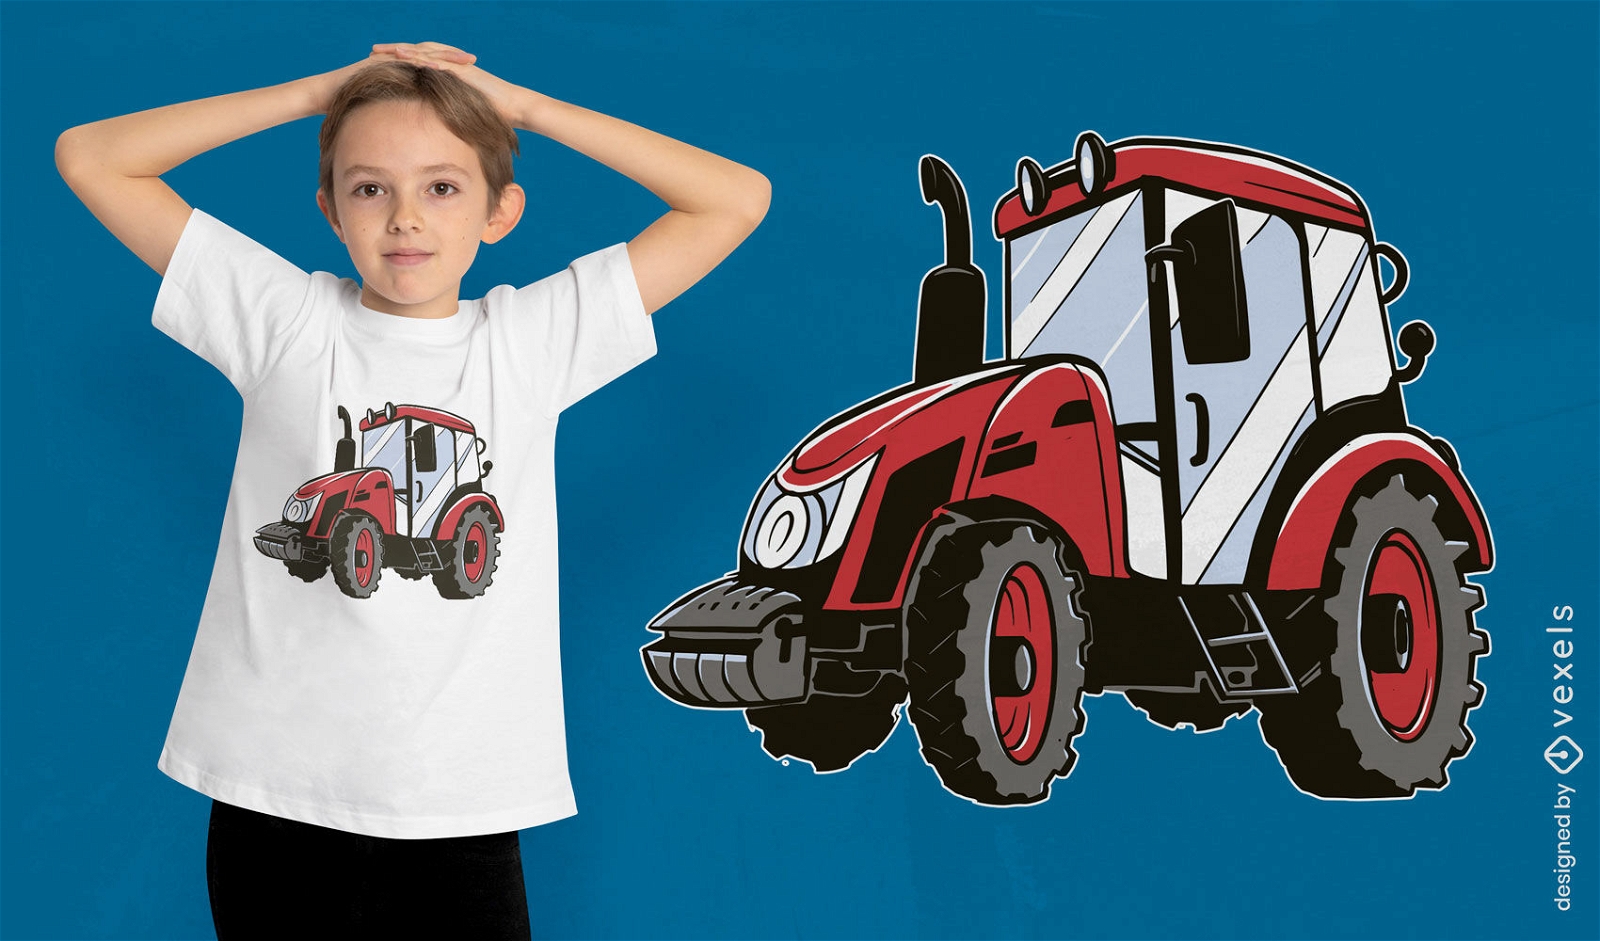 Dise?o de camiseta de tractor agr?cola rojo.